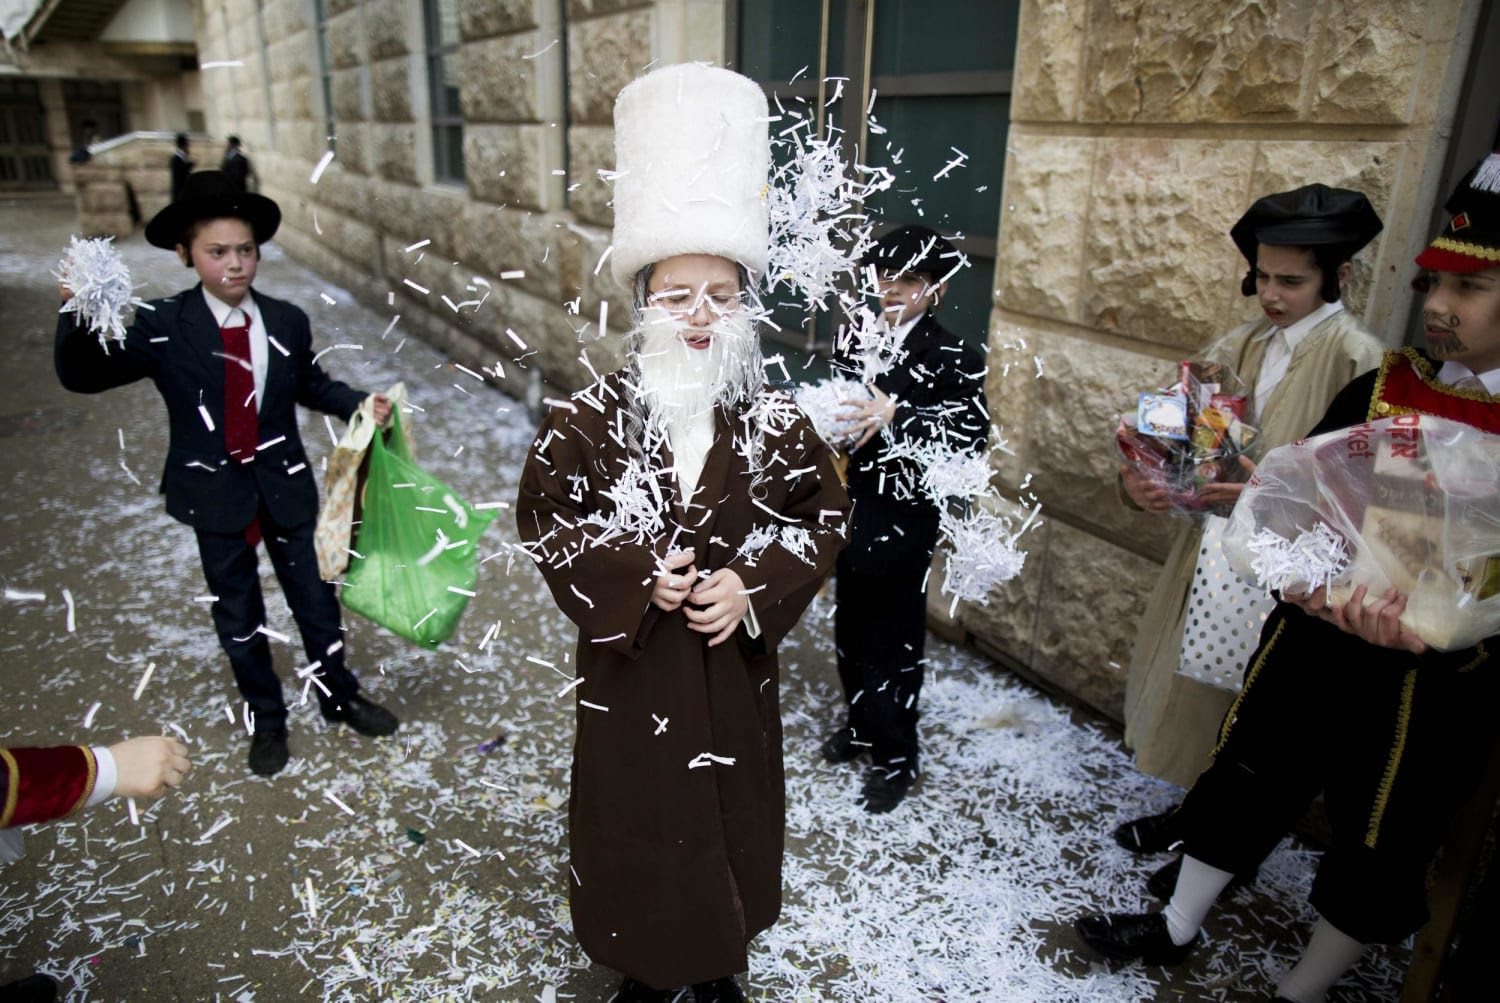 est100 一些攝影(some photos) Purim festival, Israel. 普林節, 以色列